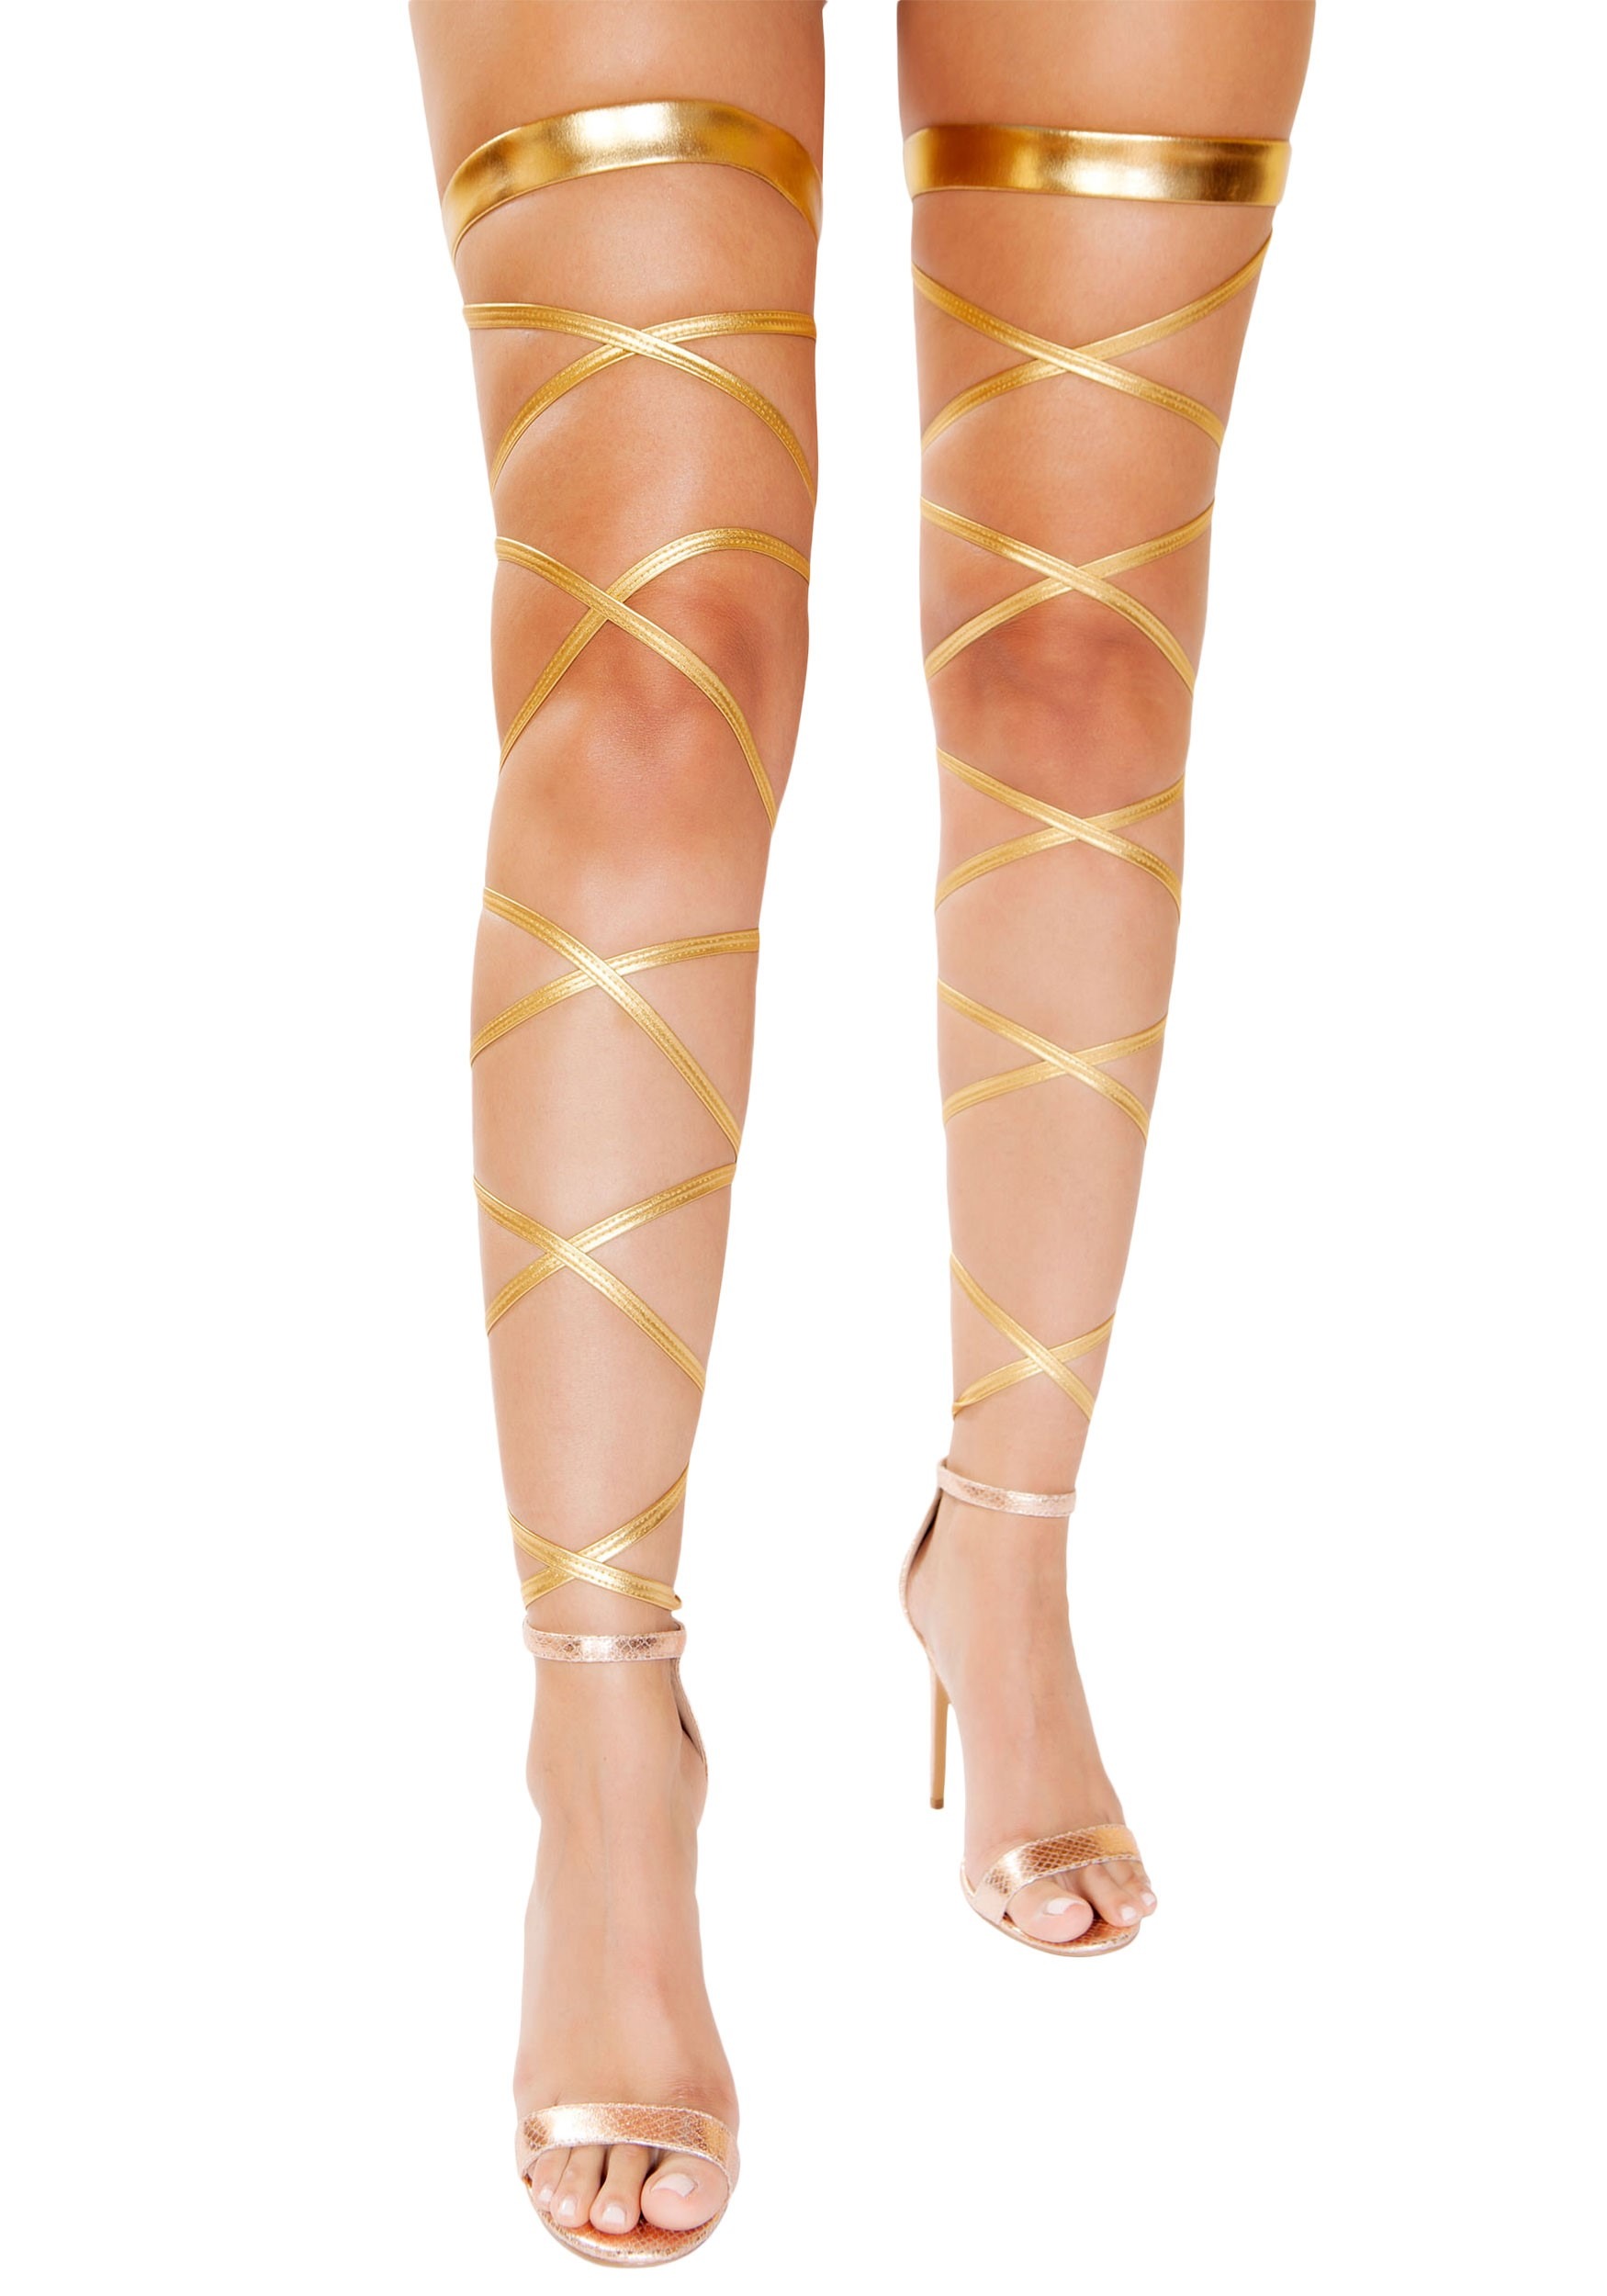 https://images.halloweencostumes.ca/products/57836/1-1/goddess-leg-wraps.jpg